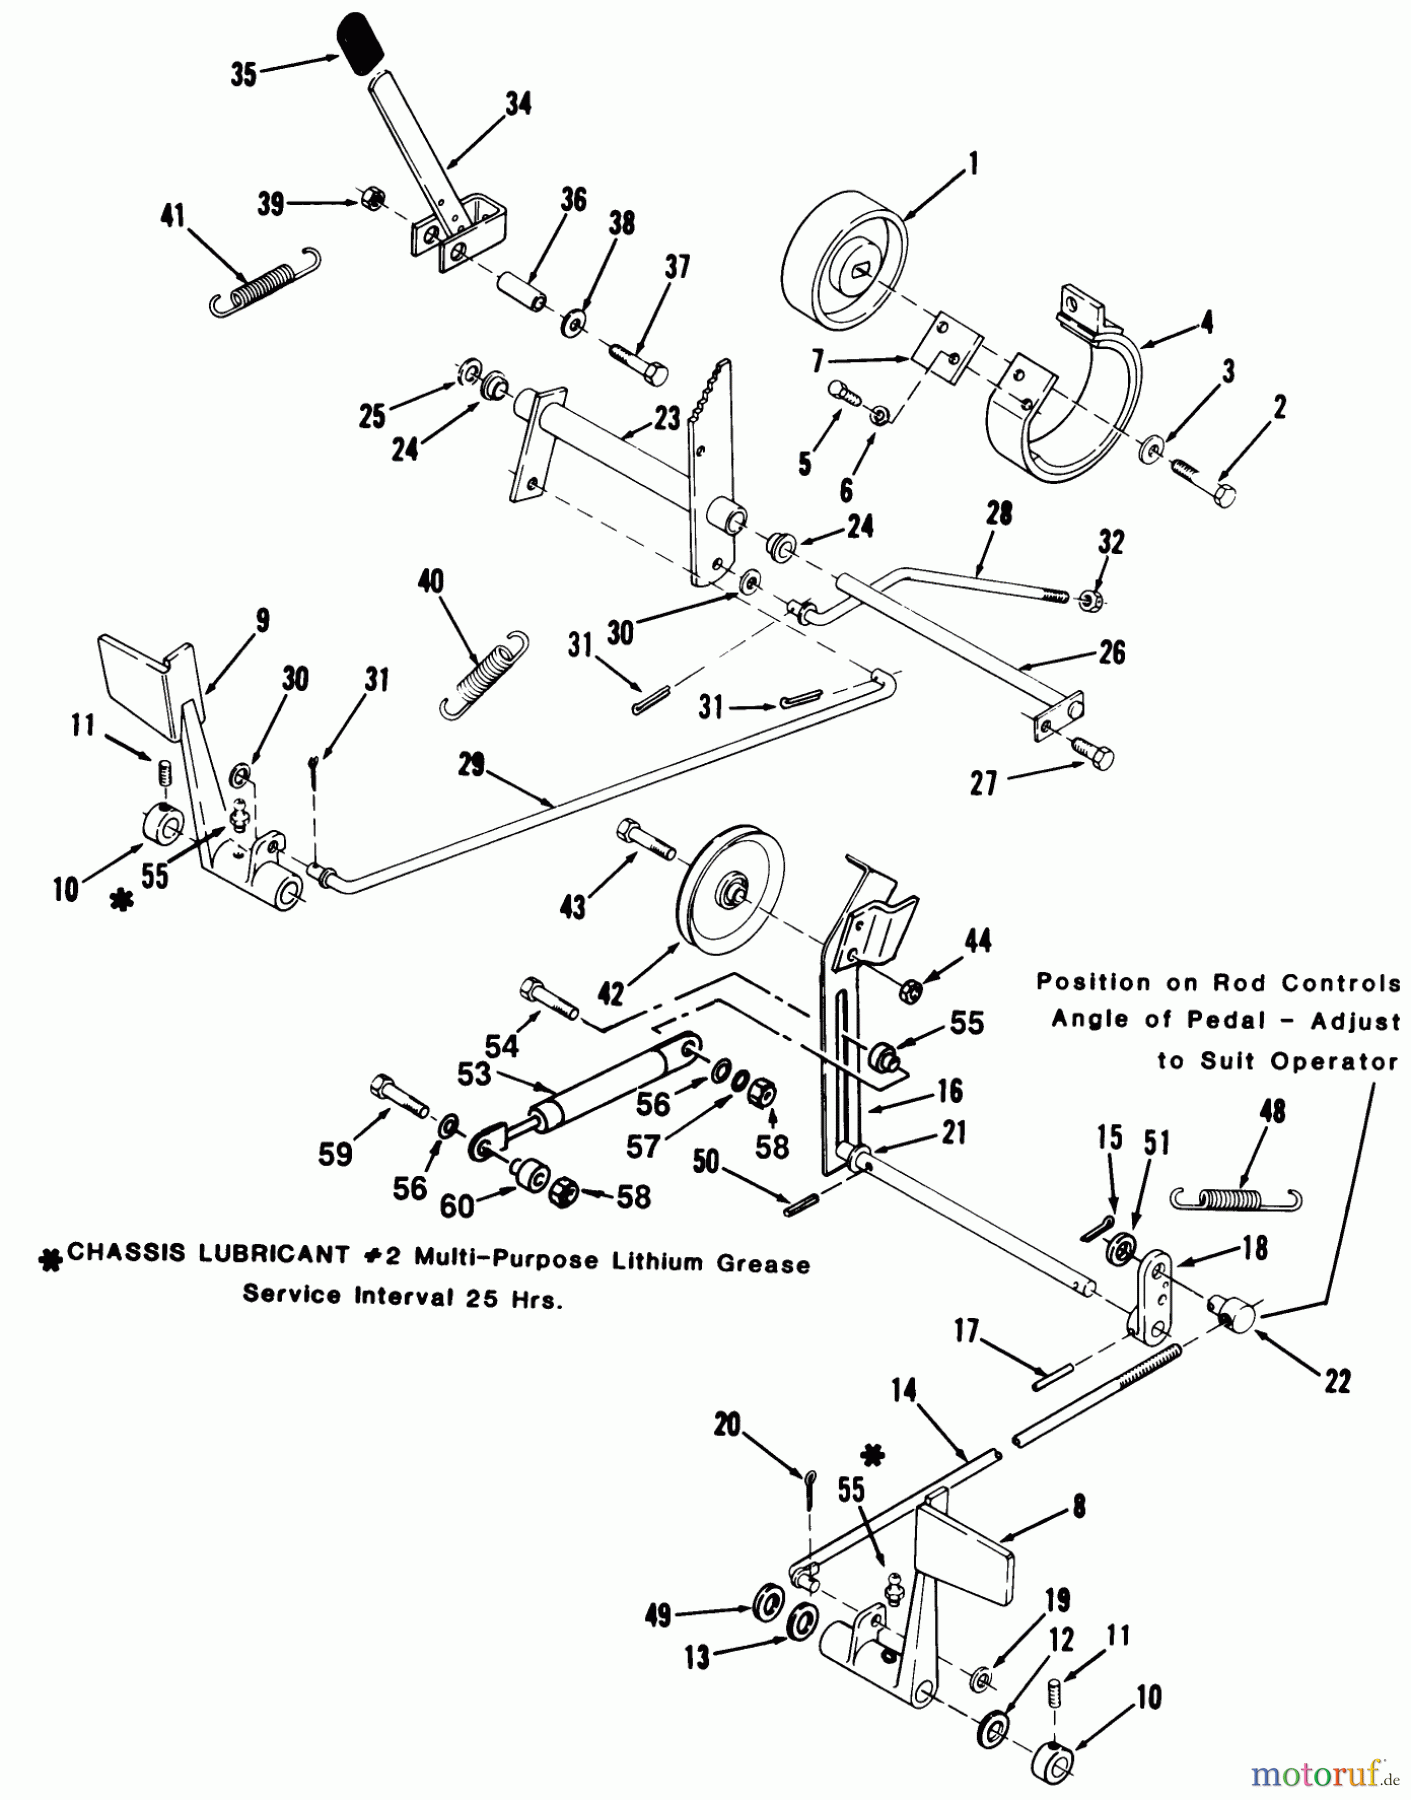  Toro Neu Mowers, Lawn & Garden Tractor Seite 1 31-10K802 (310-8) - Toro 310-8 Garden Tractor, 1991 (1000001-1999999) CLUTCH, BRAKE AND SPEED CONTROL LINKAGE